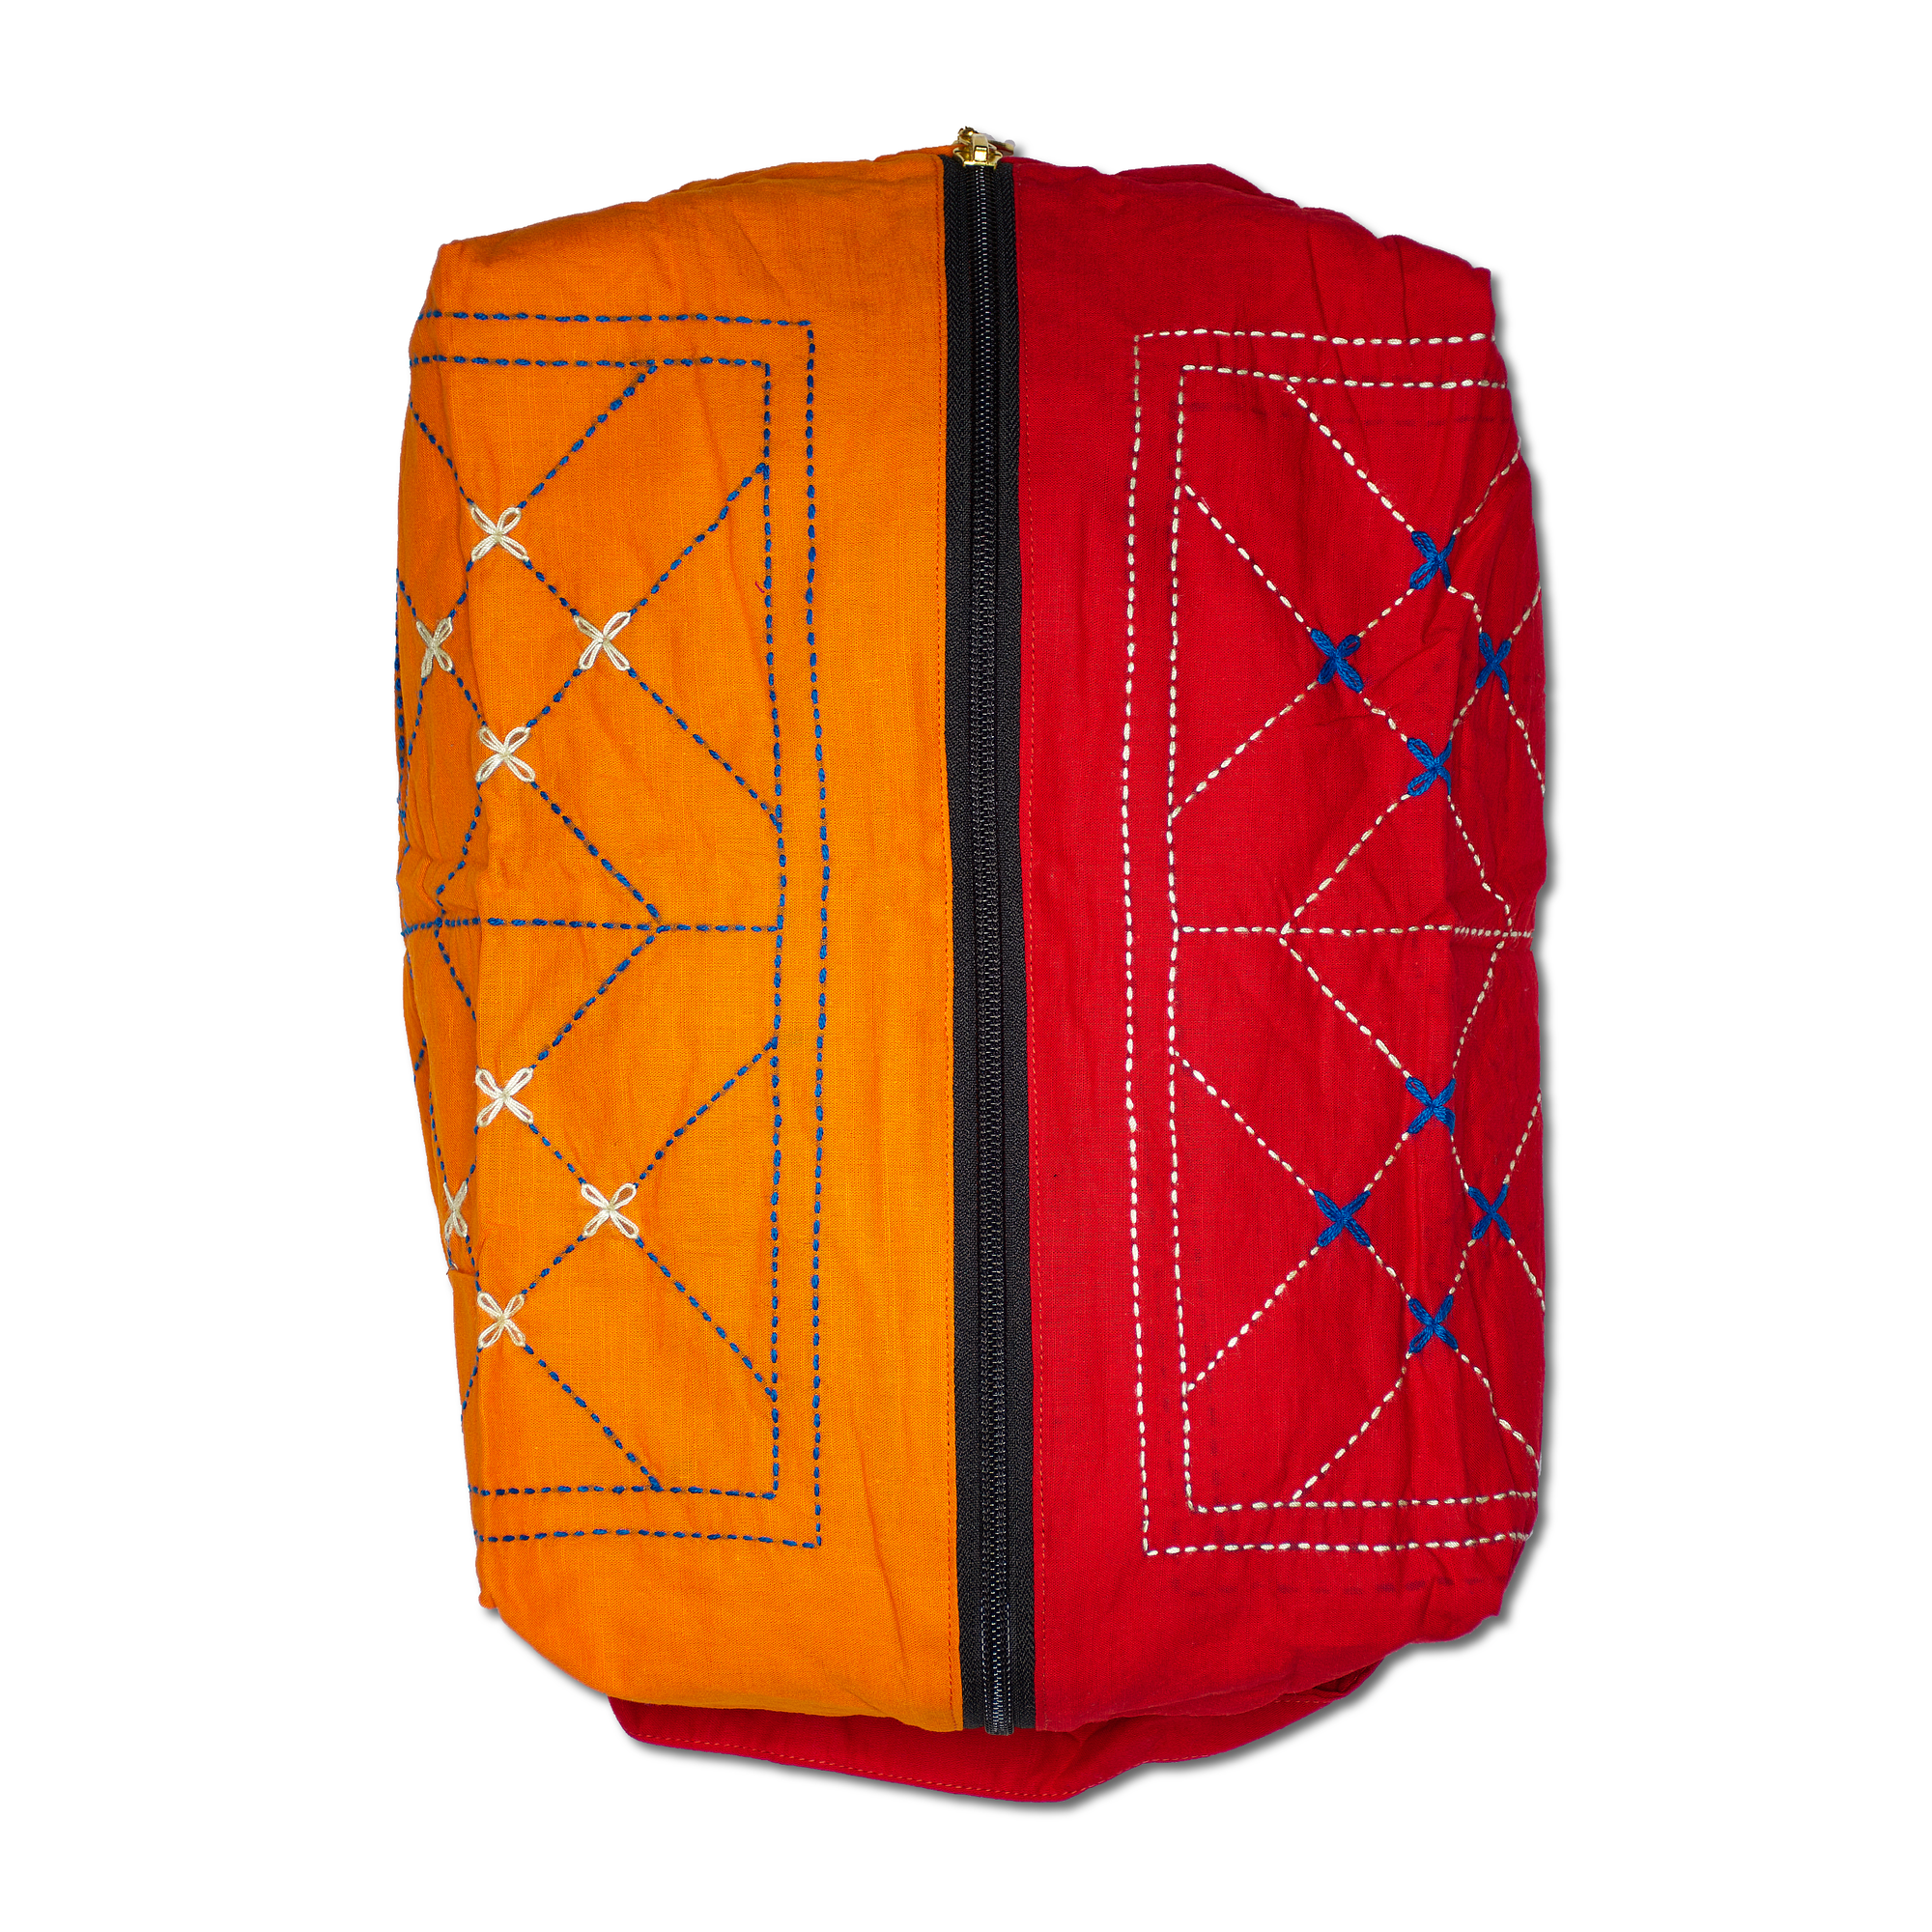 Pouch Bags - Kurigram (geometric) Design - Asif (Orange) / Sumi (Red)